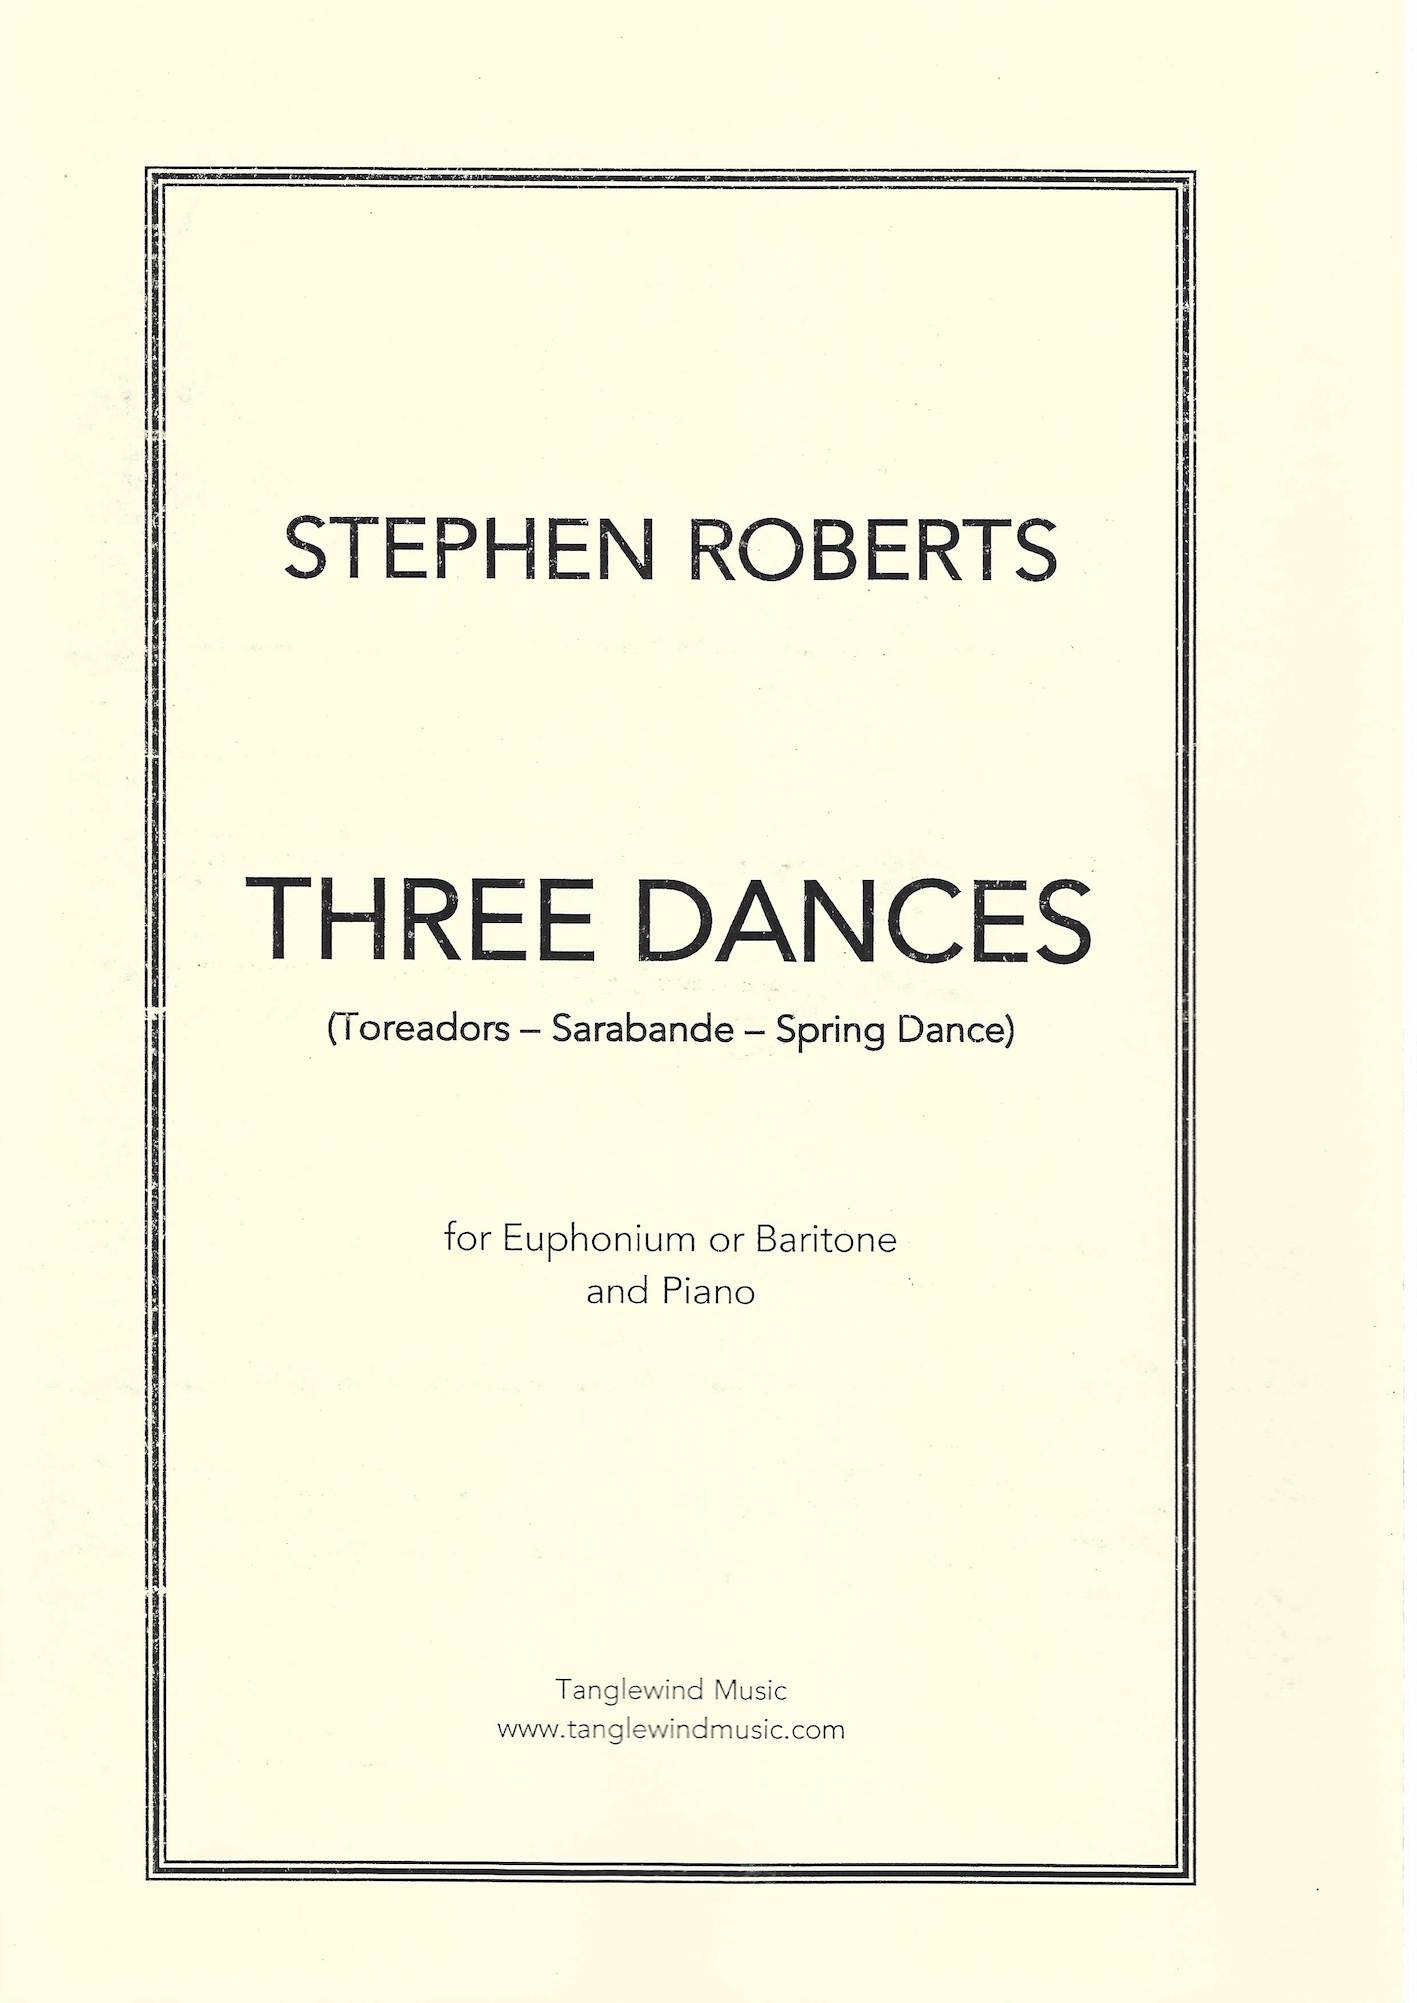 Three Dances - Stephen Roberts - Euphonium or Baritone and Piano